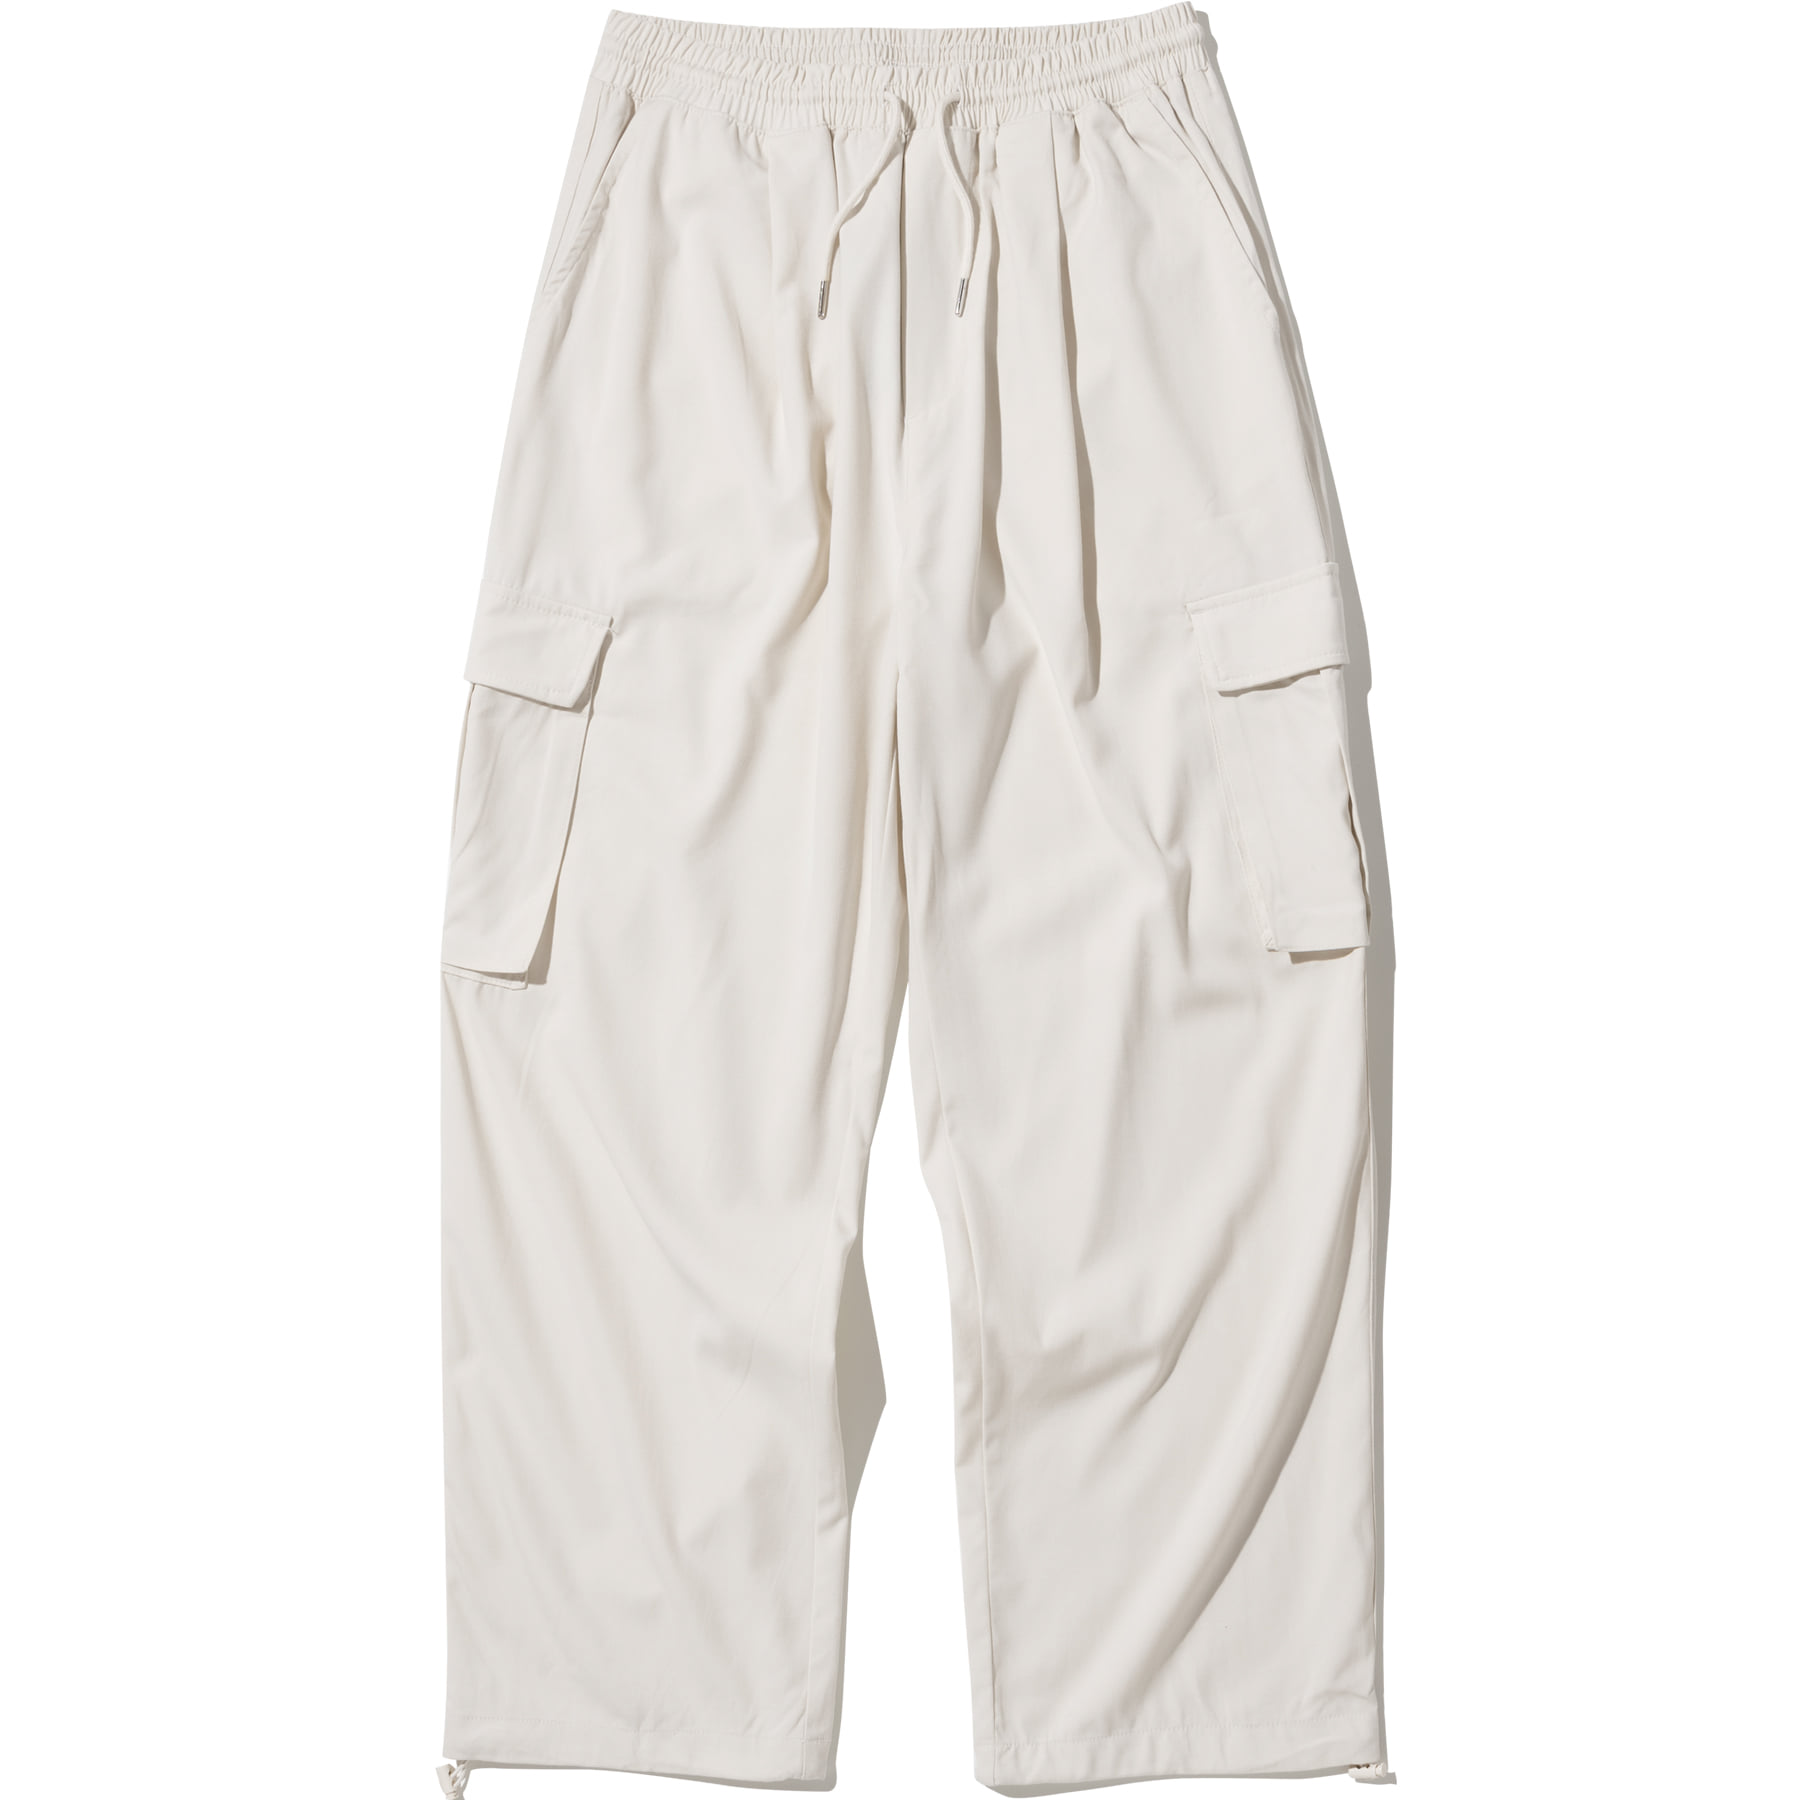 Wide String Cargo Slacks Pants - Ivory,NOT4NERD